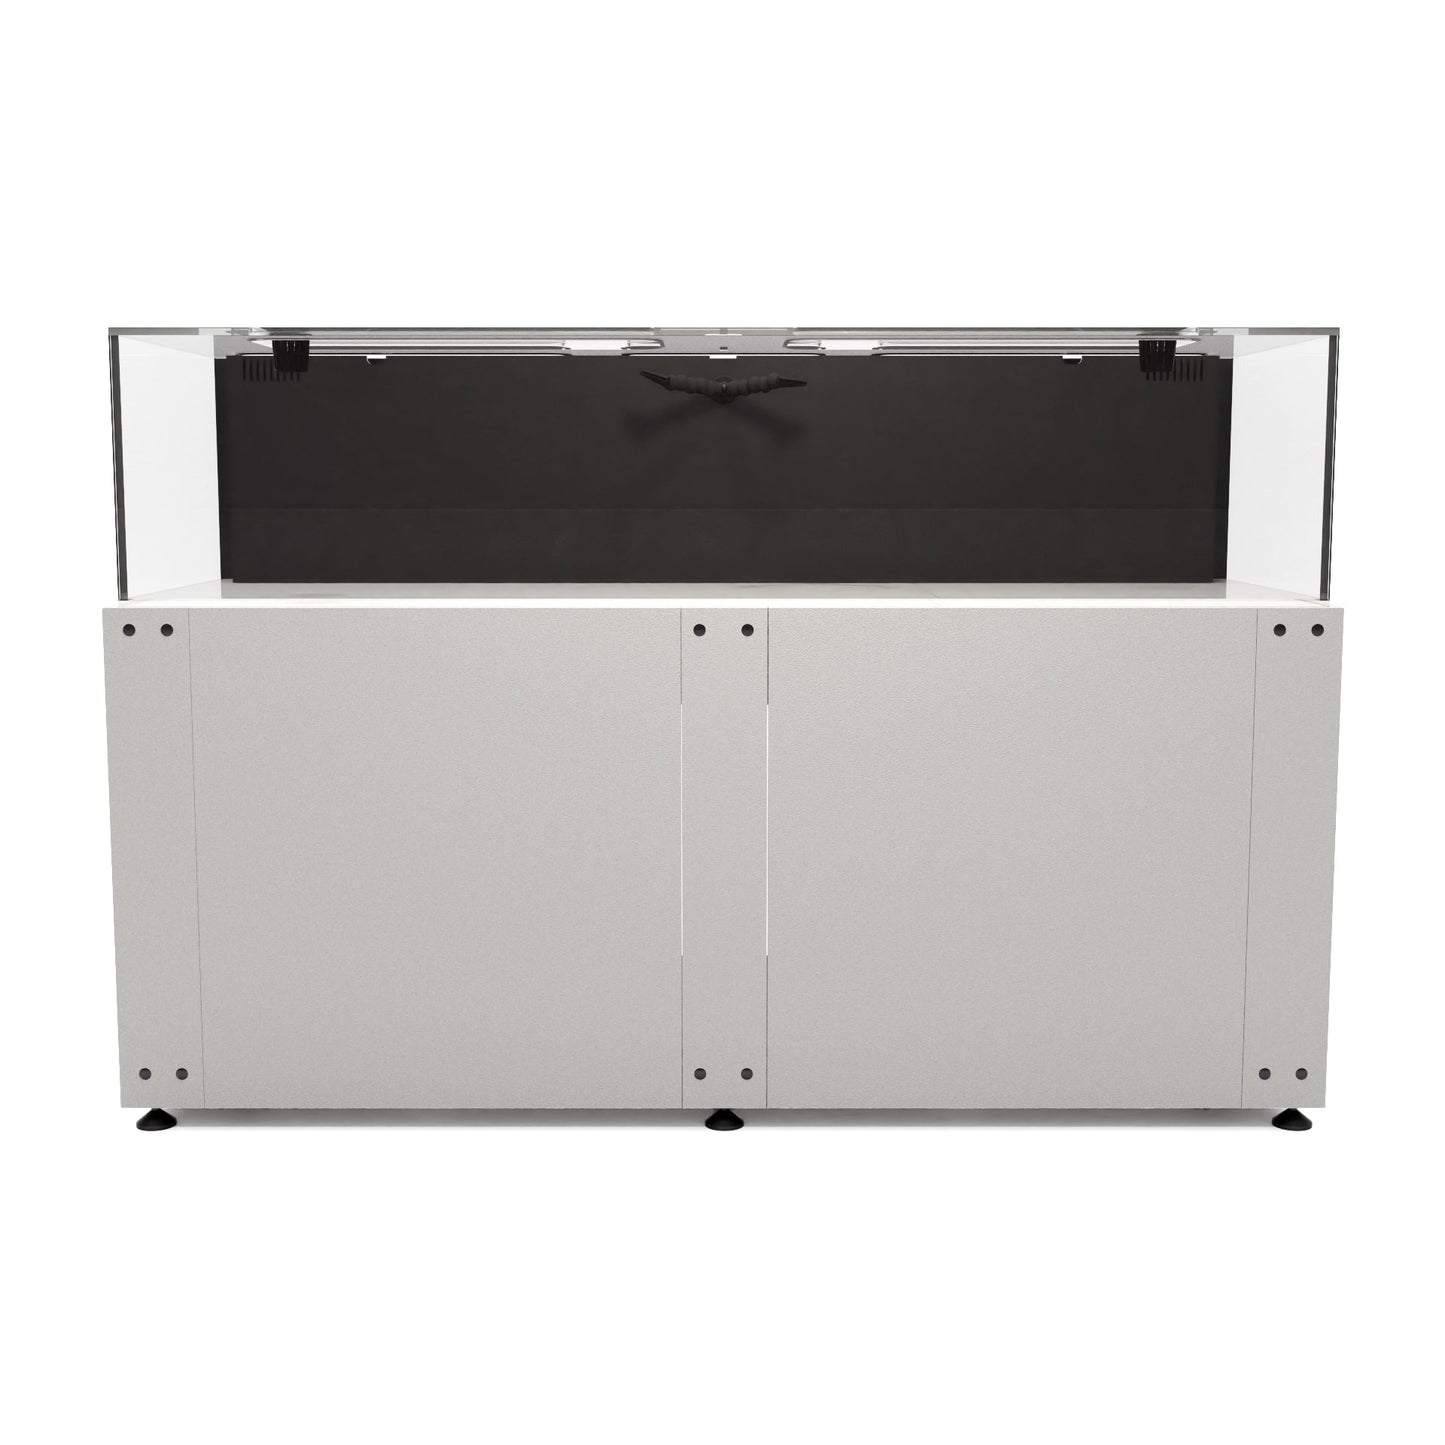 Tenecor Advantage® 160 Wet/Dry AIO Aquarium and Aluminum Stand Bundle 96x24x16